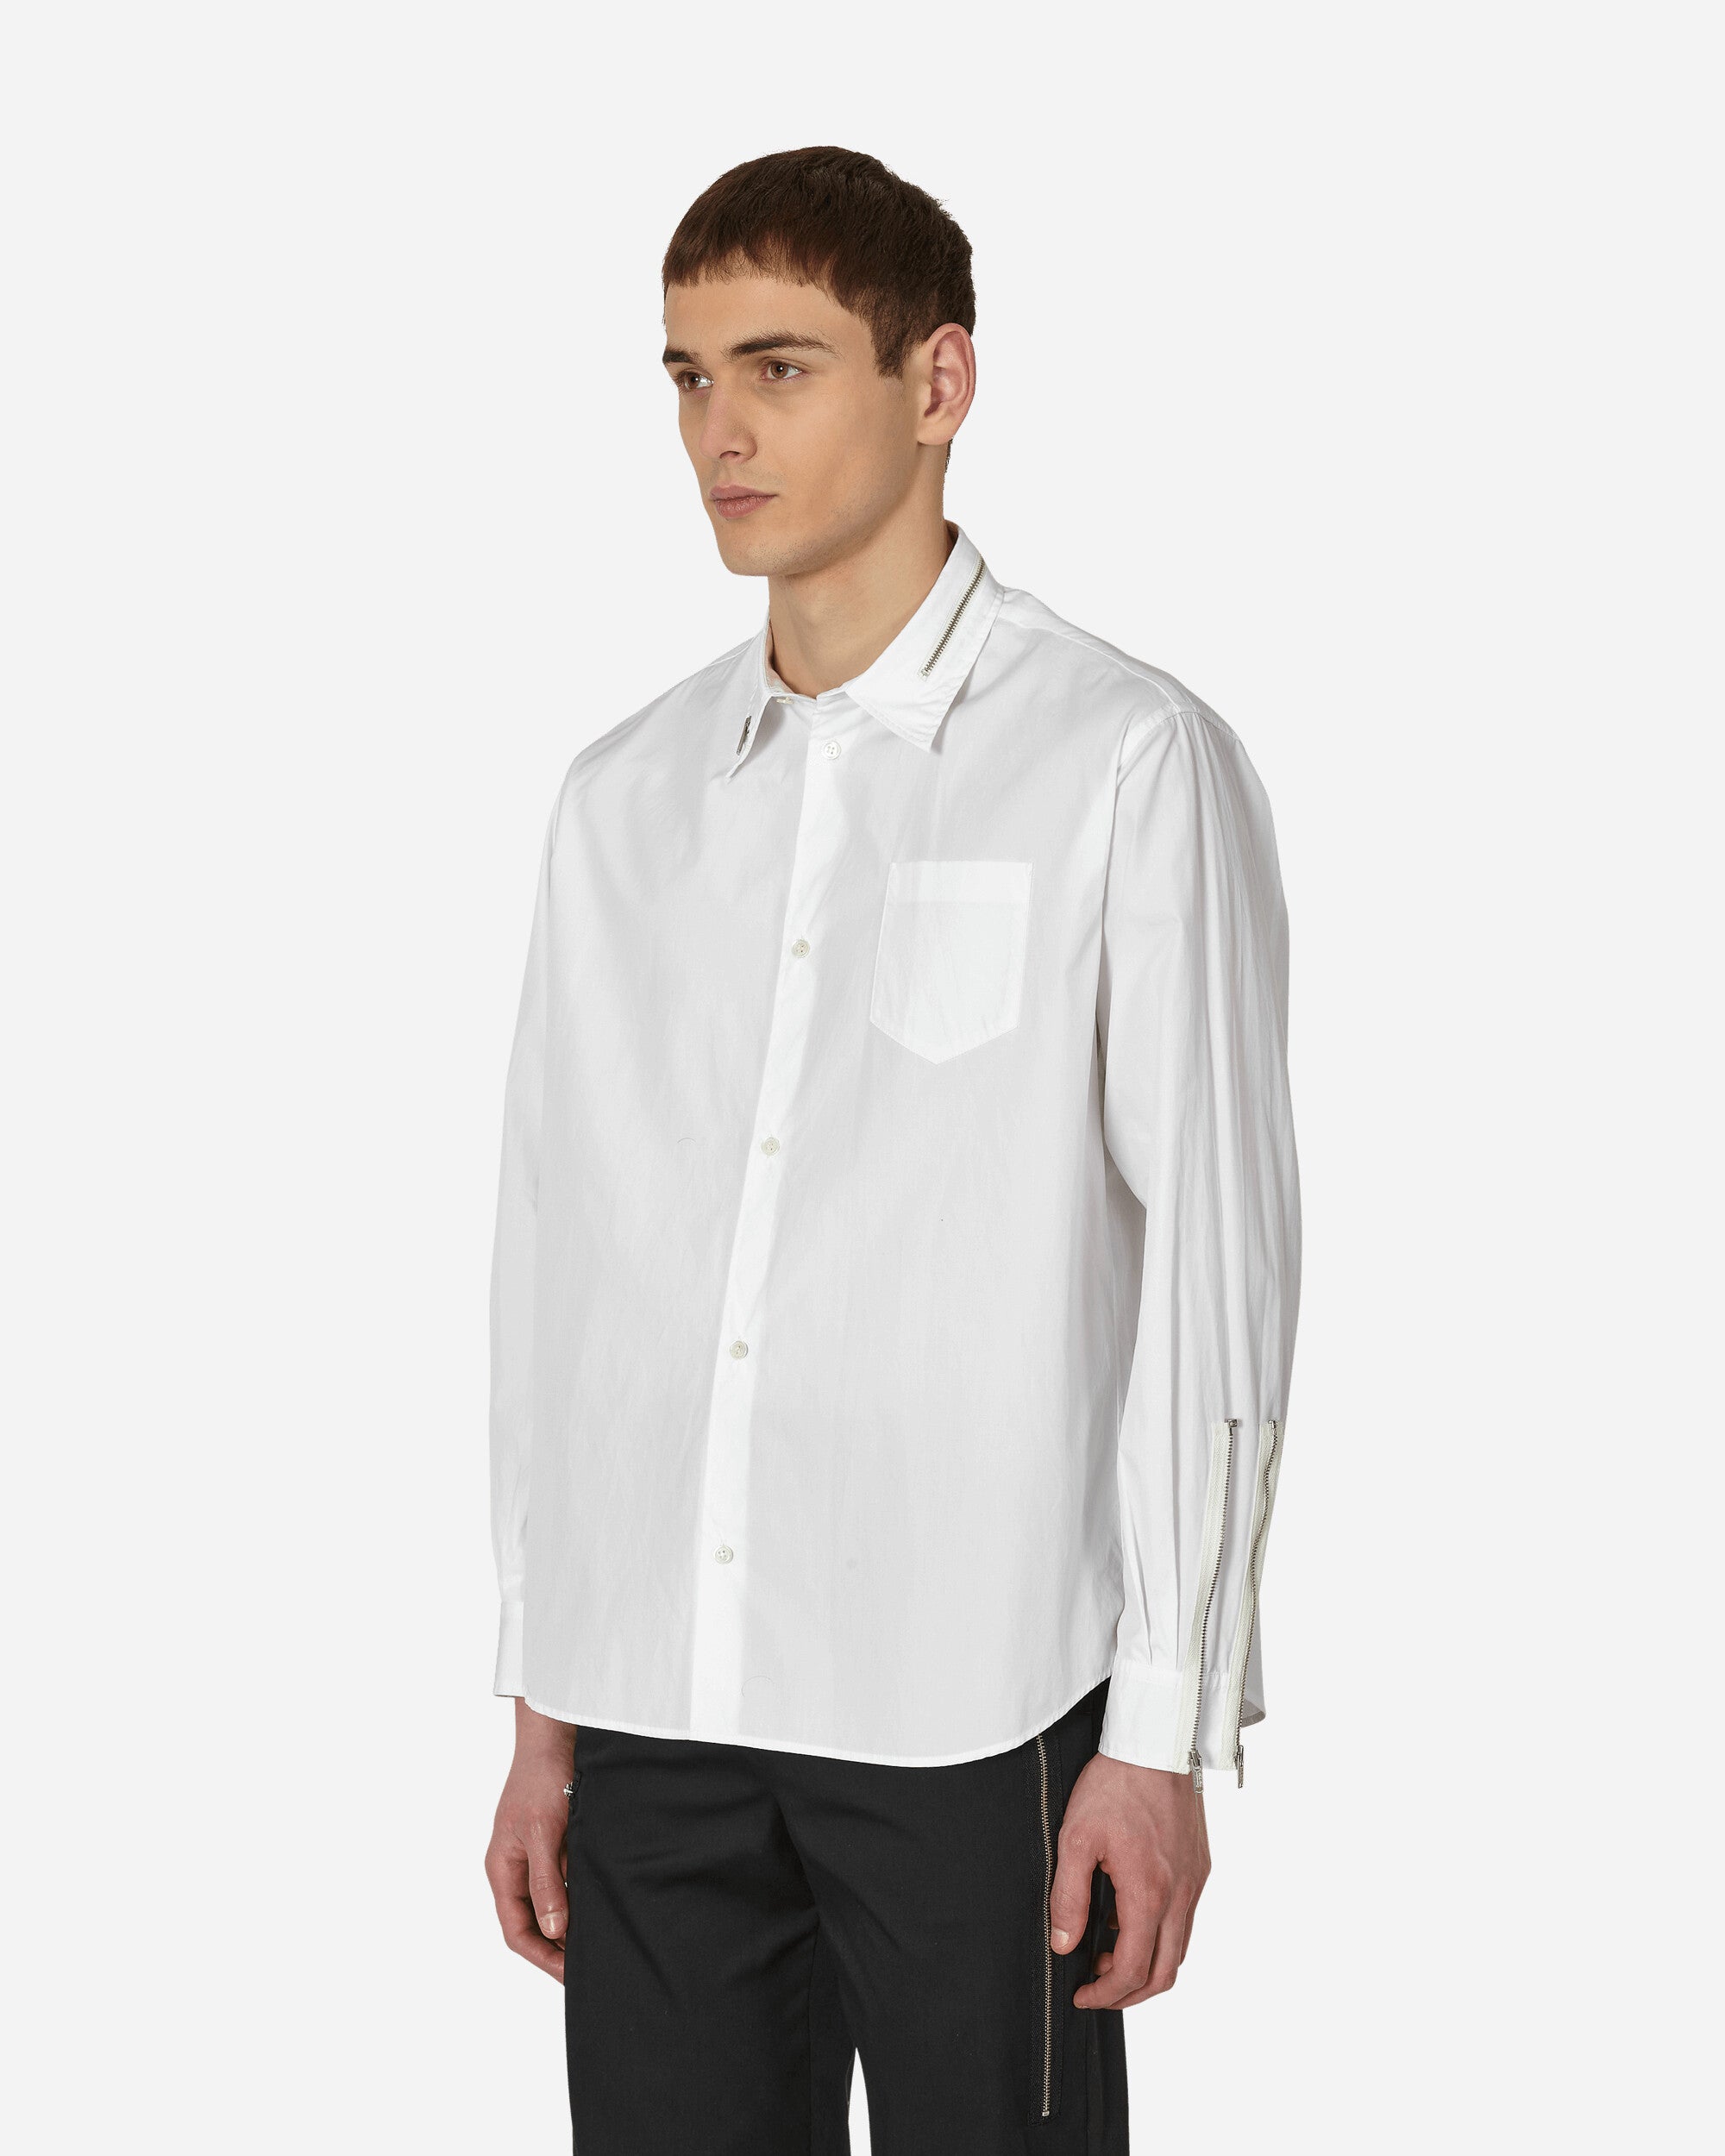 Undercover Zipper Shirt White Shirts Longsleeve Shirt UC1C4401 001